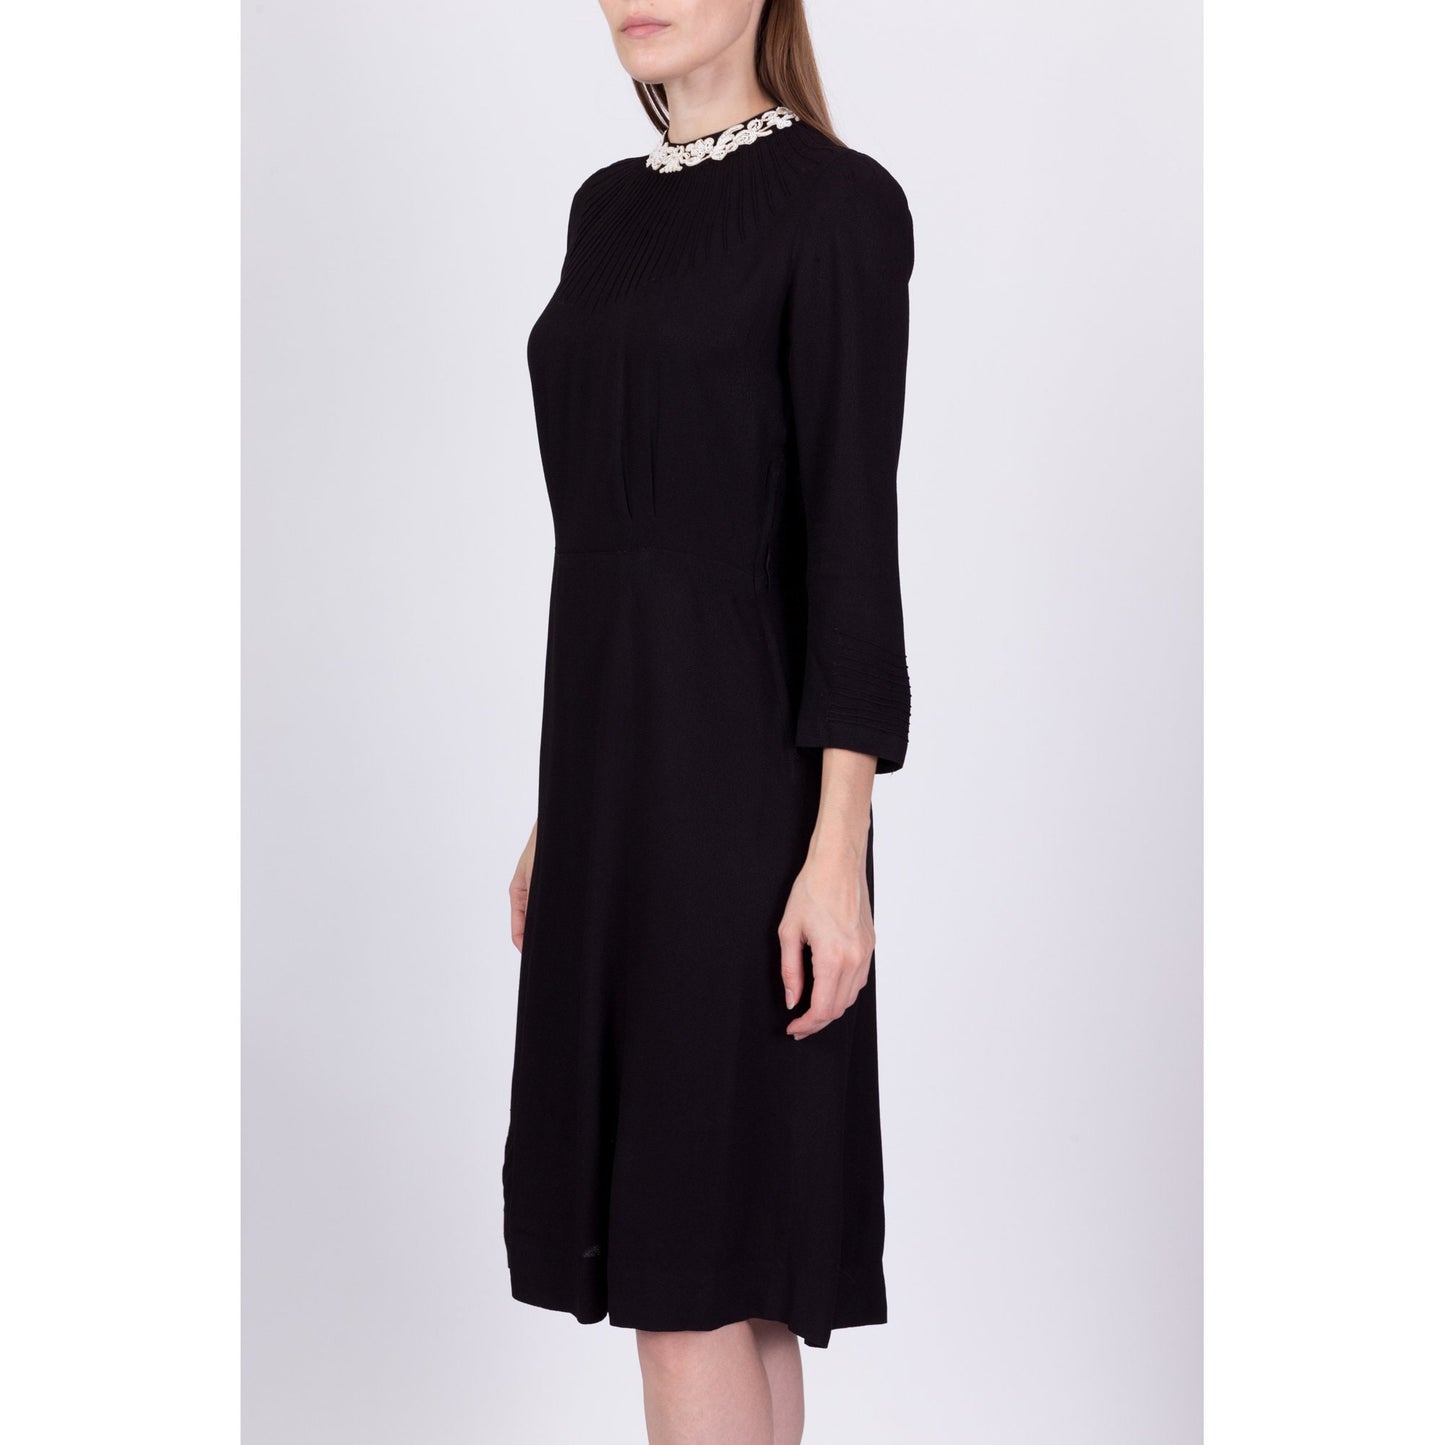 1940s Gothic Black & White Beaded Collar Dress - Petite Medium 